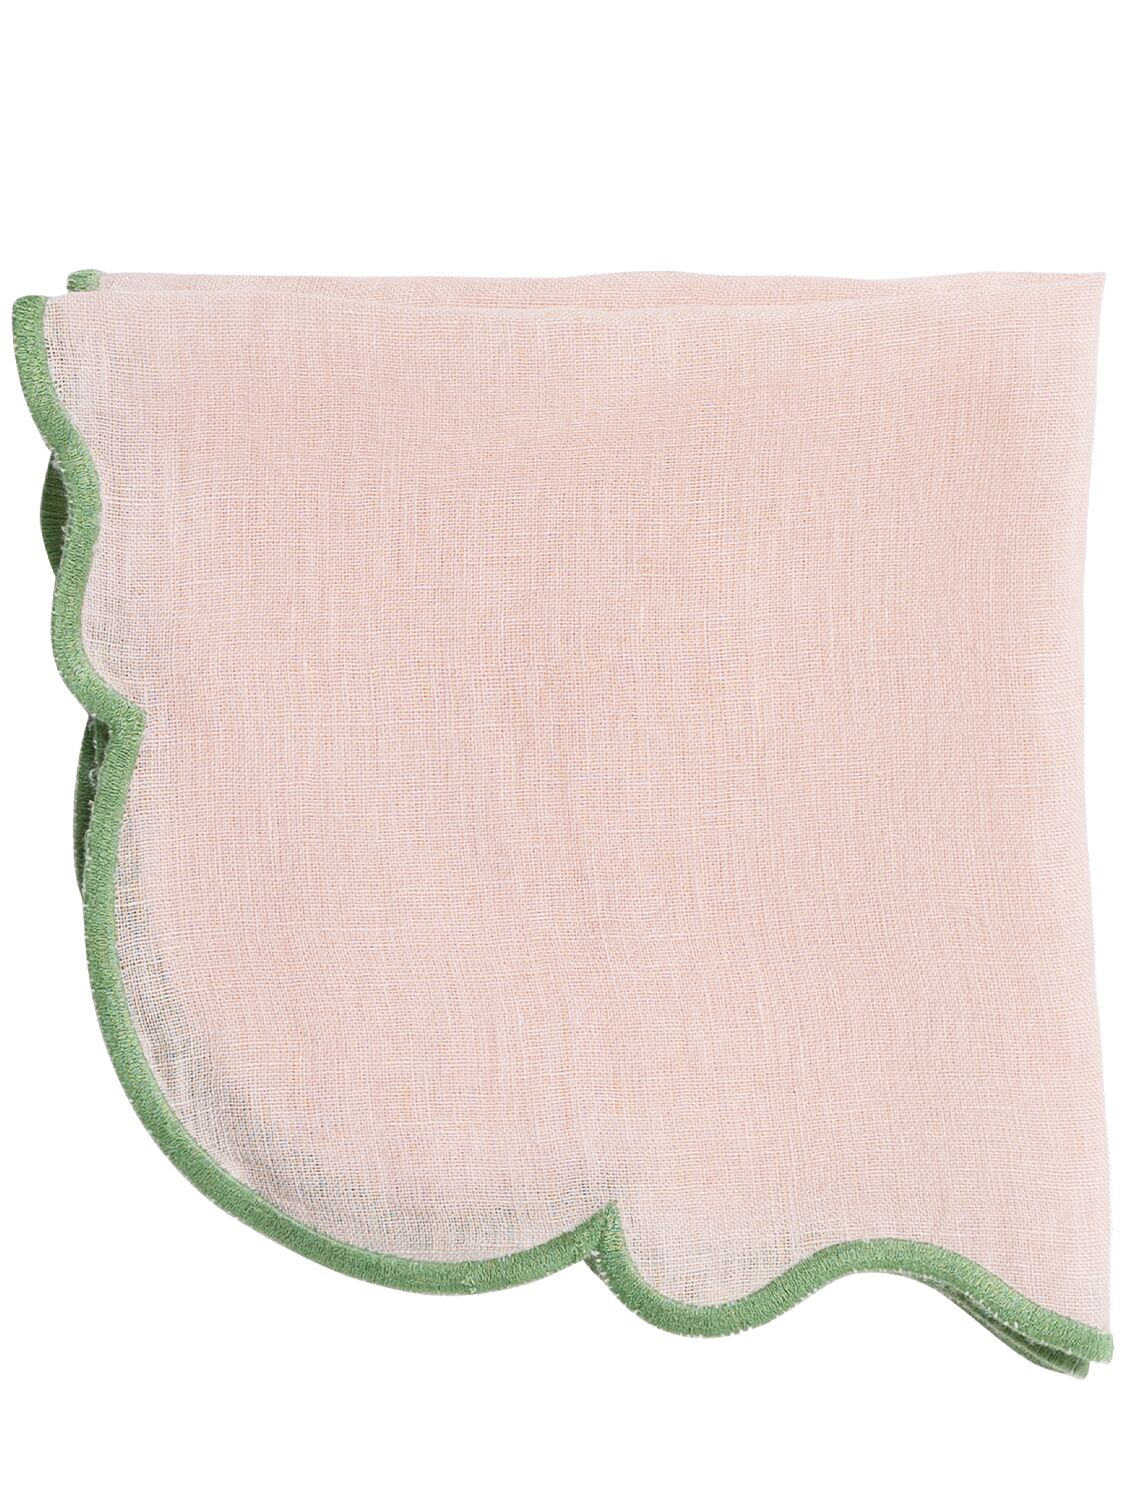 Bitossi Home Set Of 4 Linen Napkins In Pink